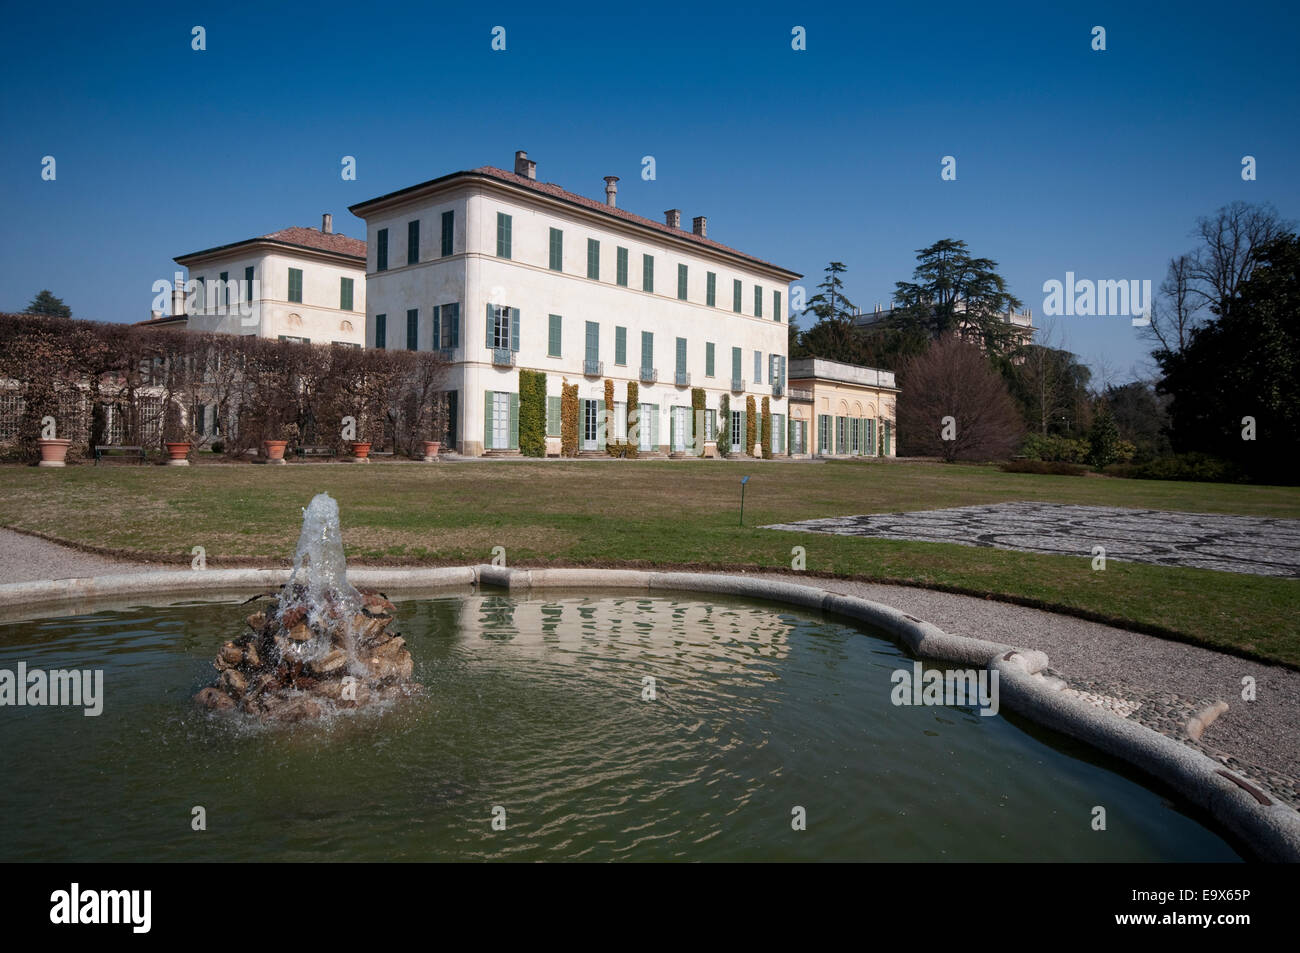 Villa panza varese hi-res stock photography and images - Alamy